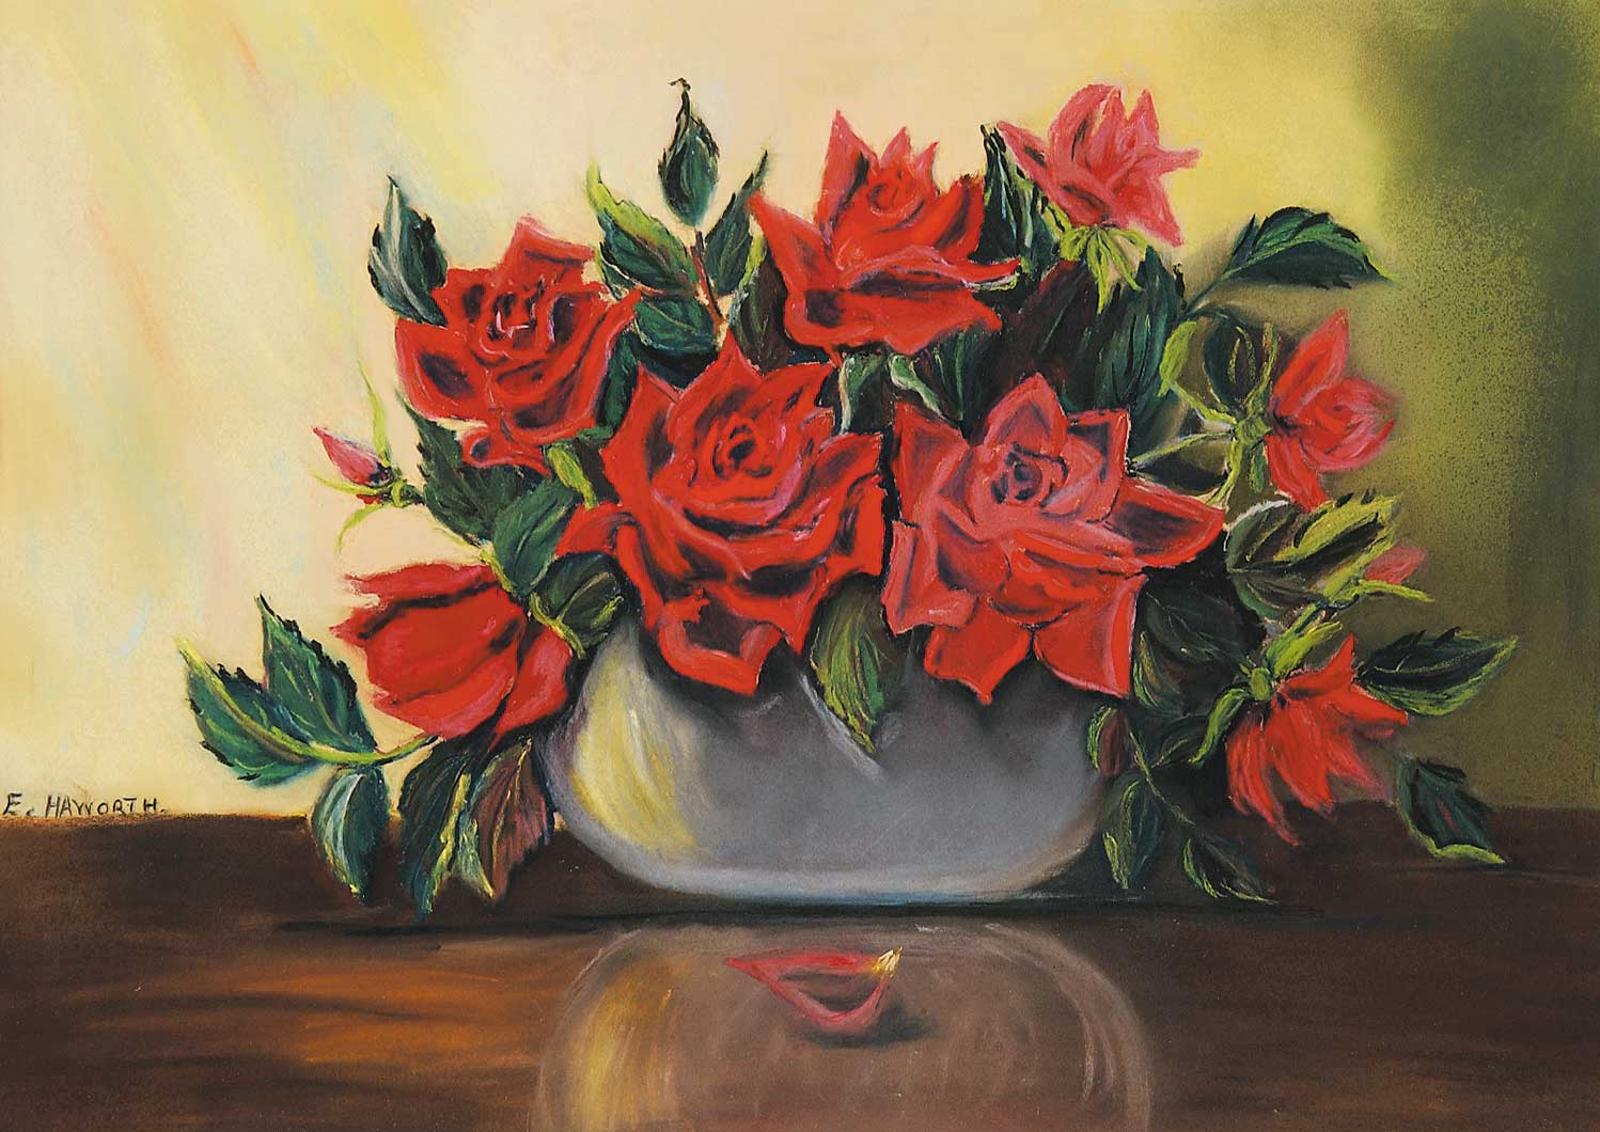 E. Haworth - Untitled - Bowl of Roses